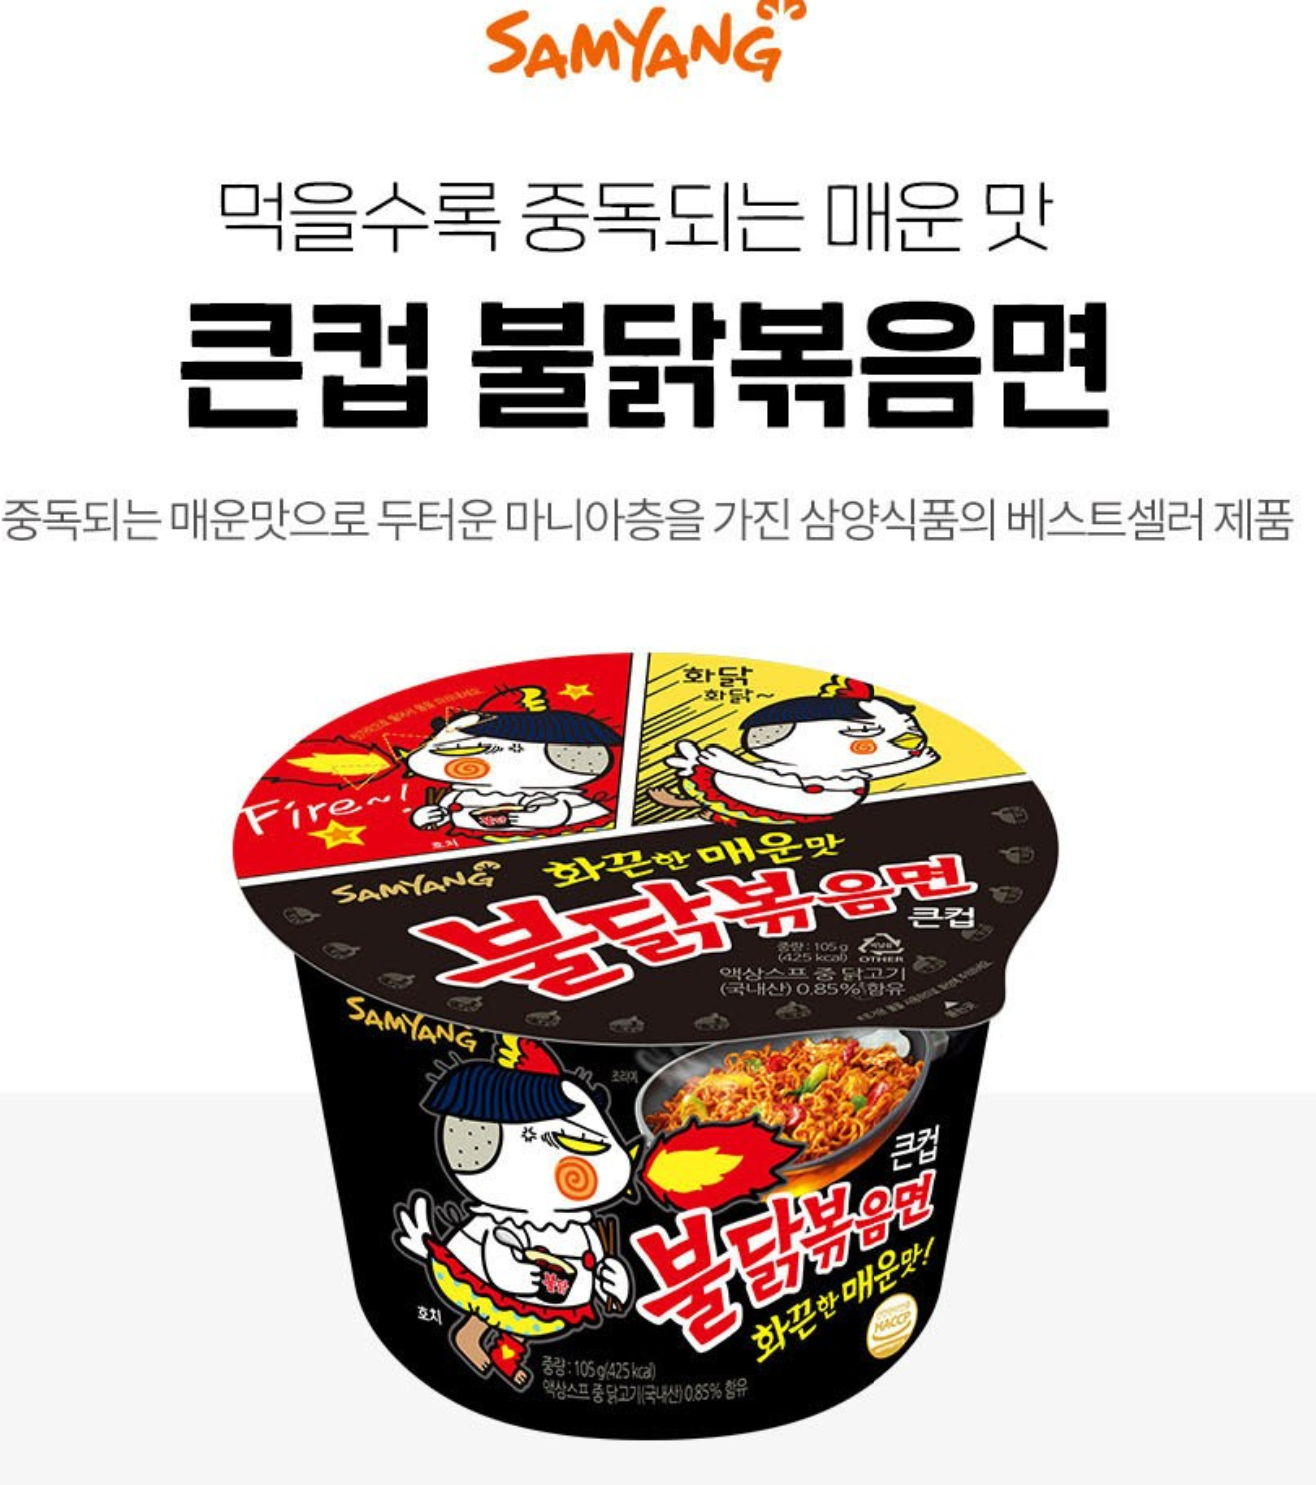 Samyang Buldak Fried Noodles Big Cup (삼양 불닭볶음면 큰컵)